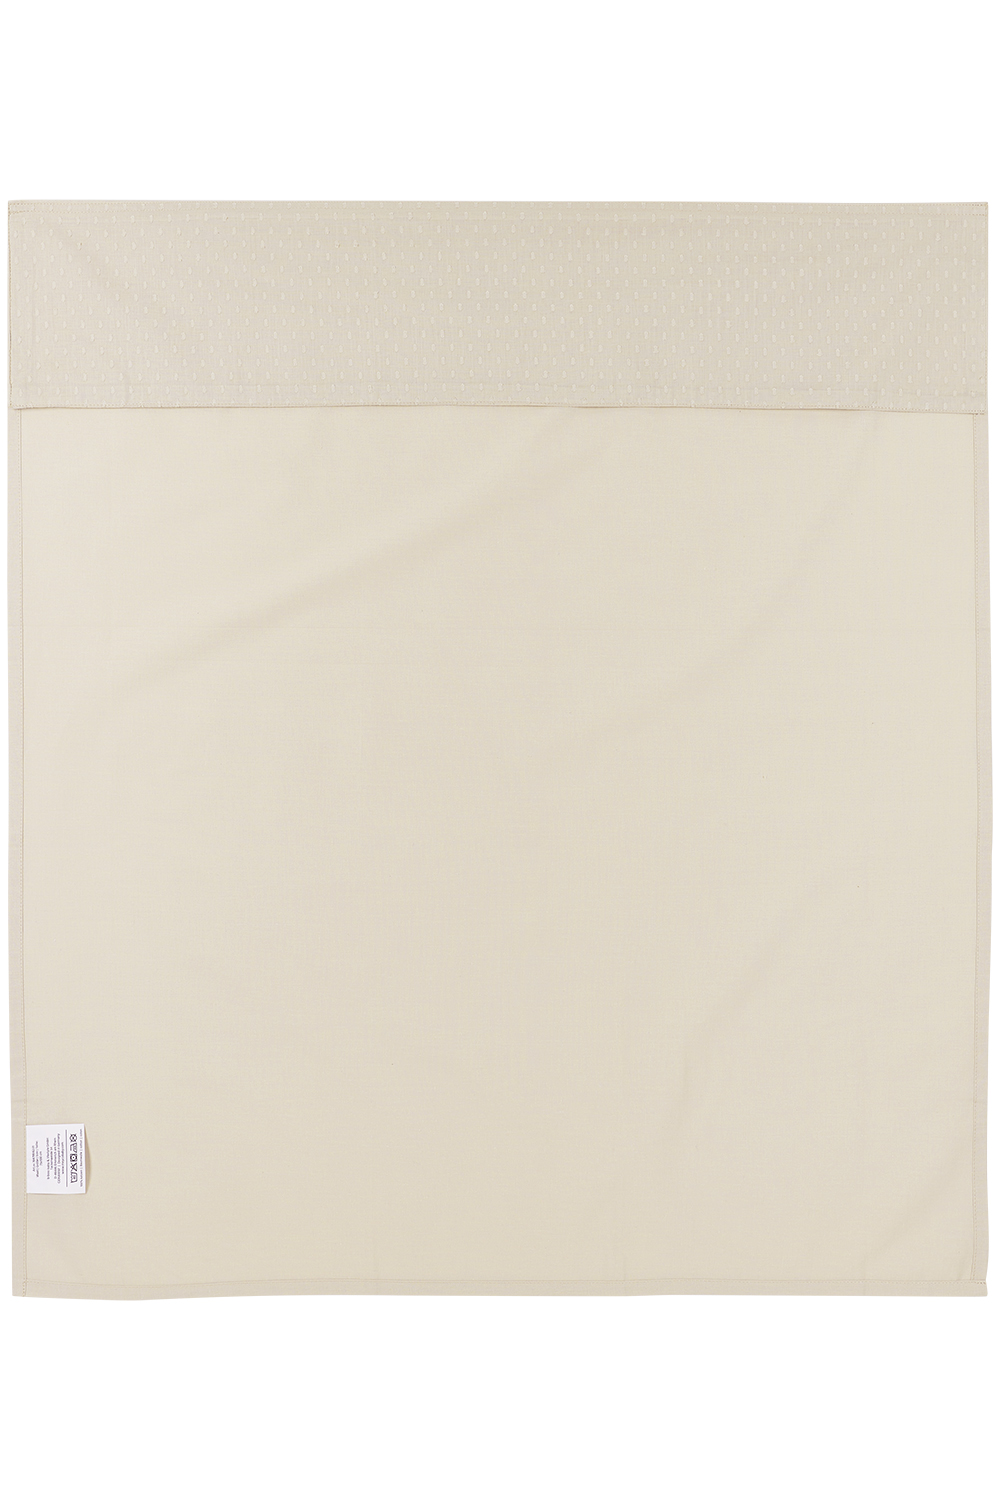 Crib sheet Plume - soft sand - 75X100cm